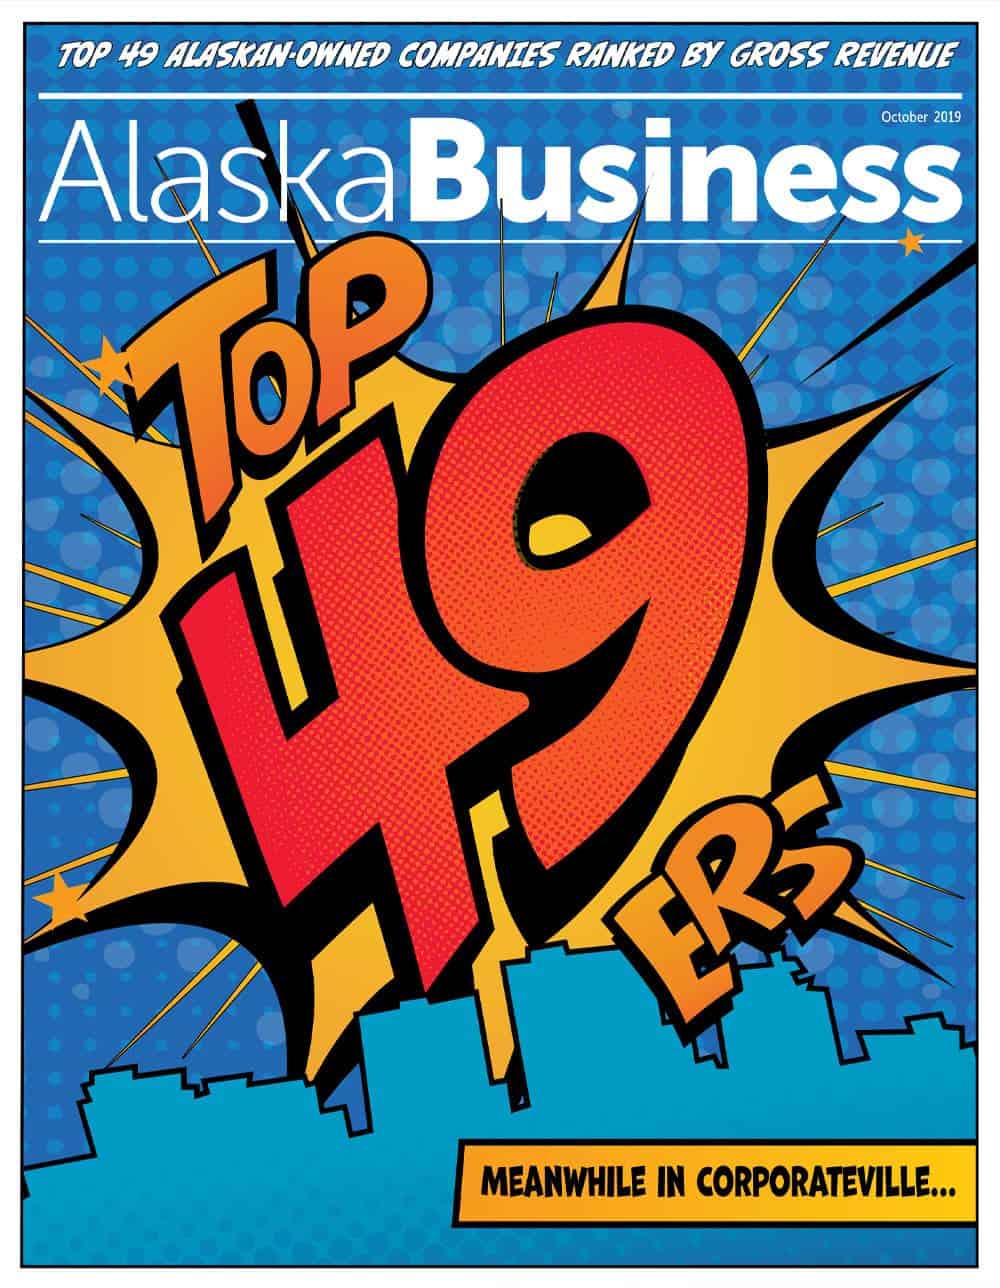 Alaska Business Magazine October 2019 cover